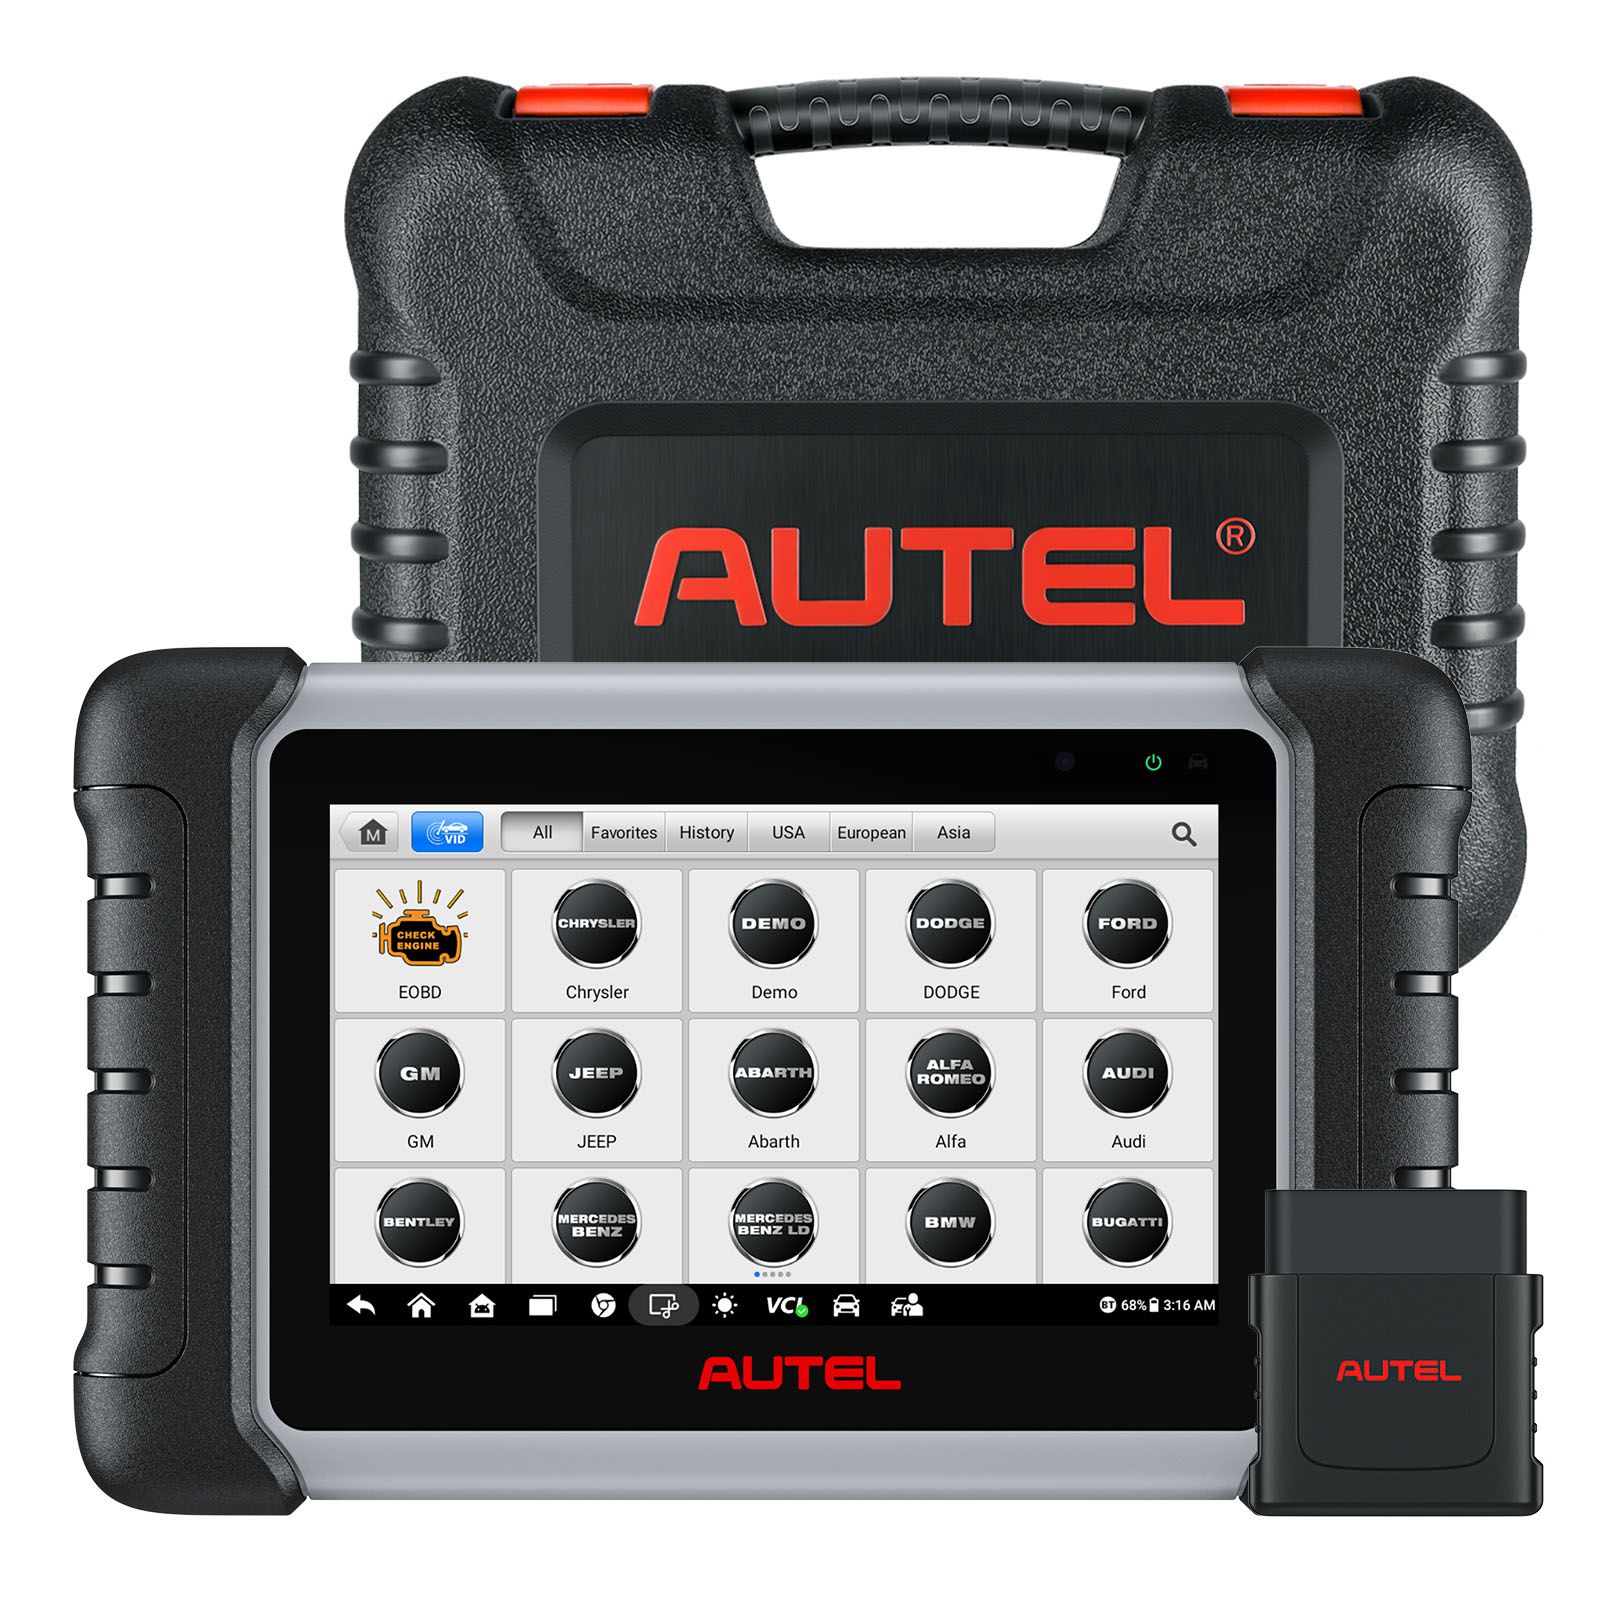 Autel MaxiCOM MK808BT PRO 자동차 진단 스캔 도구, 사전 예방 테스트 및 양방향 제어 스캐너, 28+ 서비스, FCA AutoAuth, 무선 진단